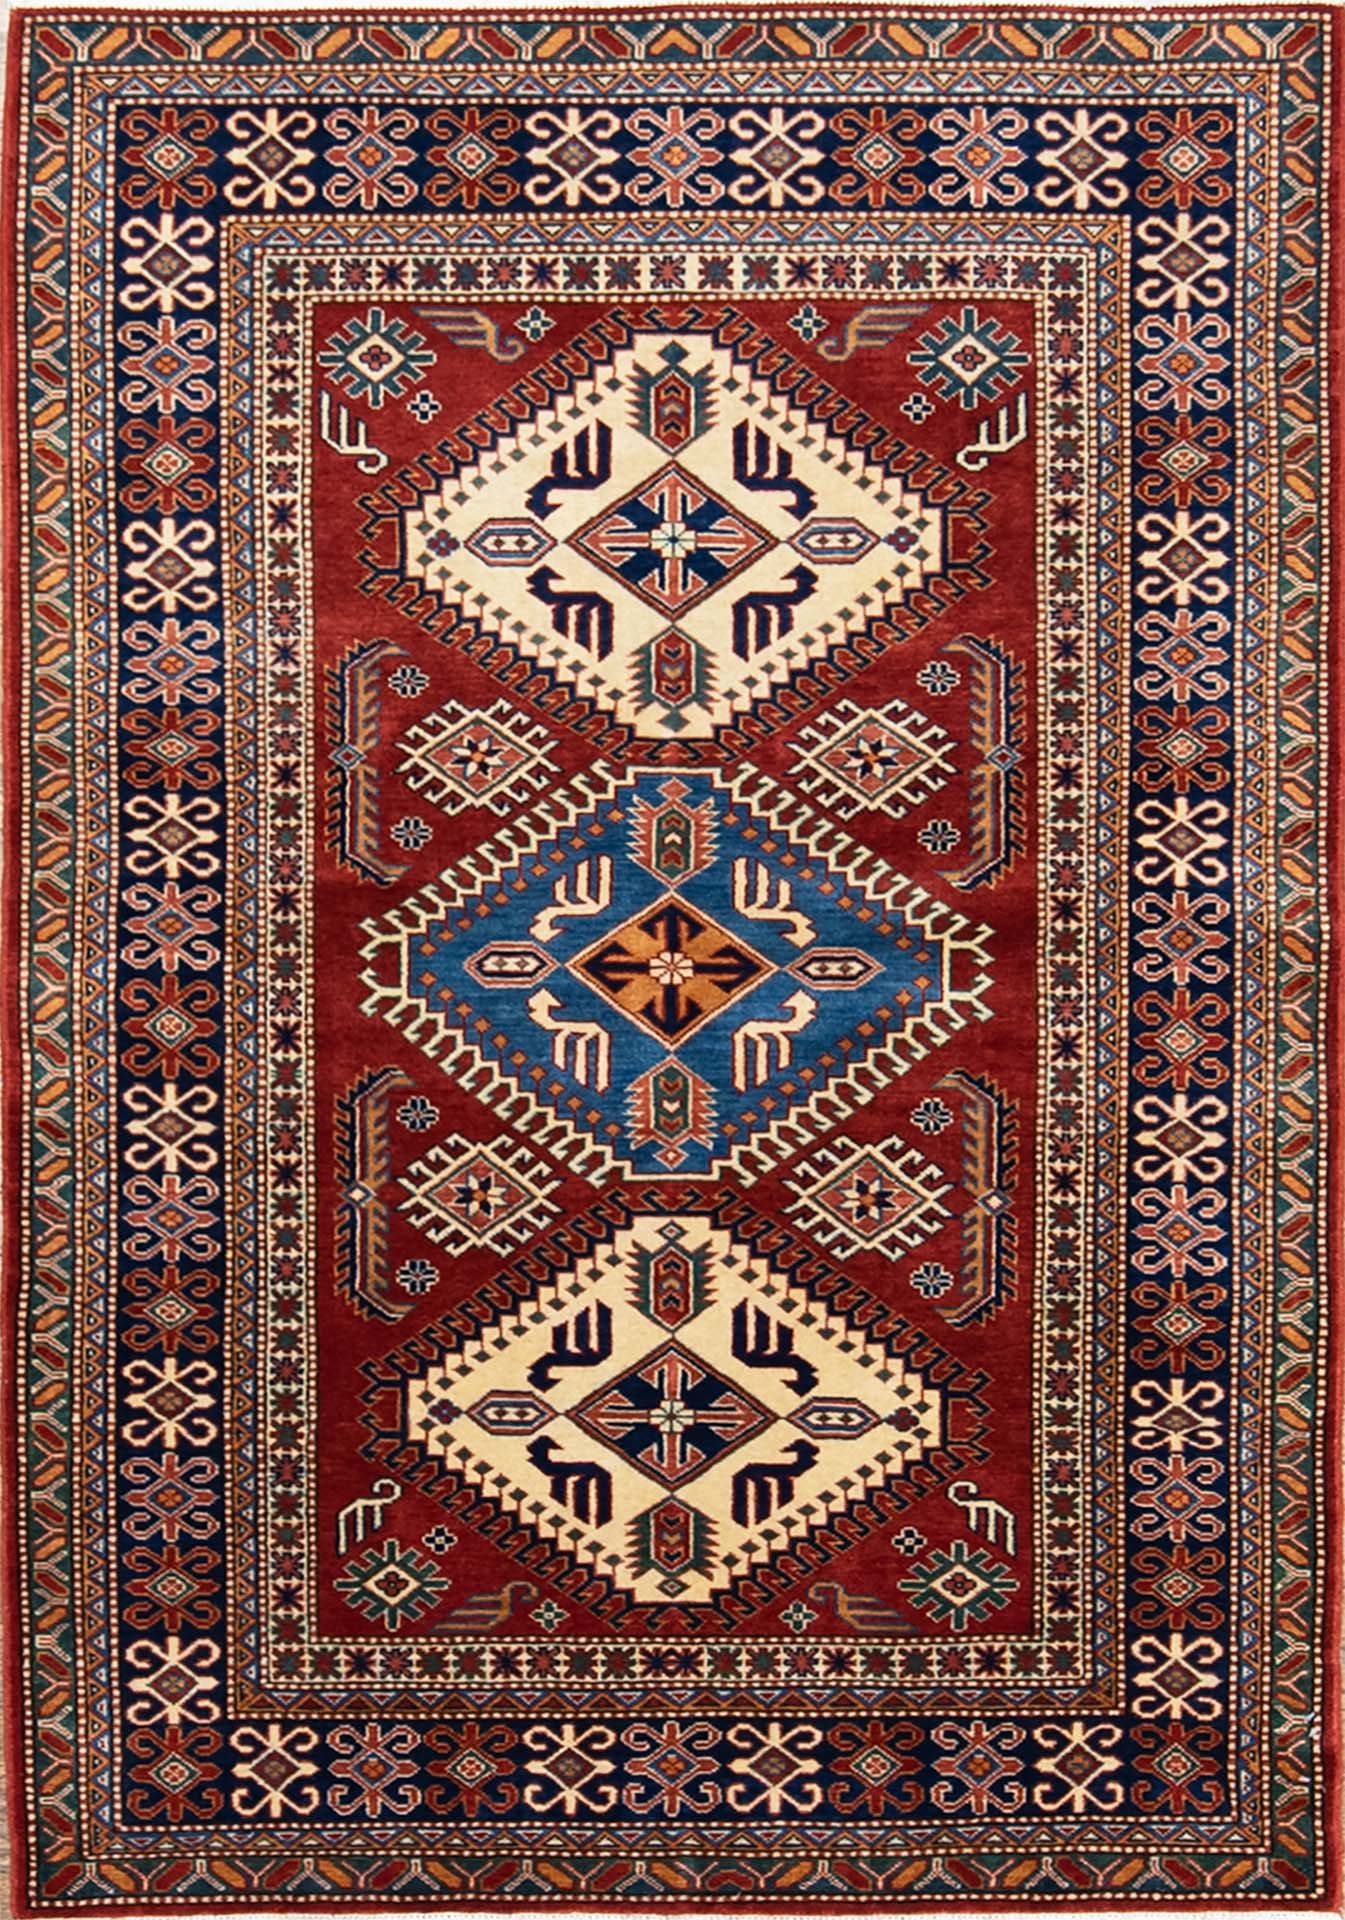 Rustic area rugs. Handmade Geometric Kazak area rug in rustic red color. Size 4.2x5.10.